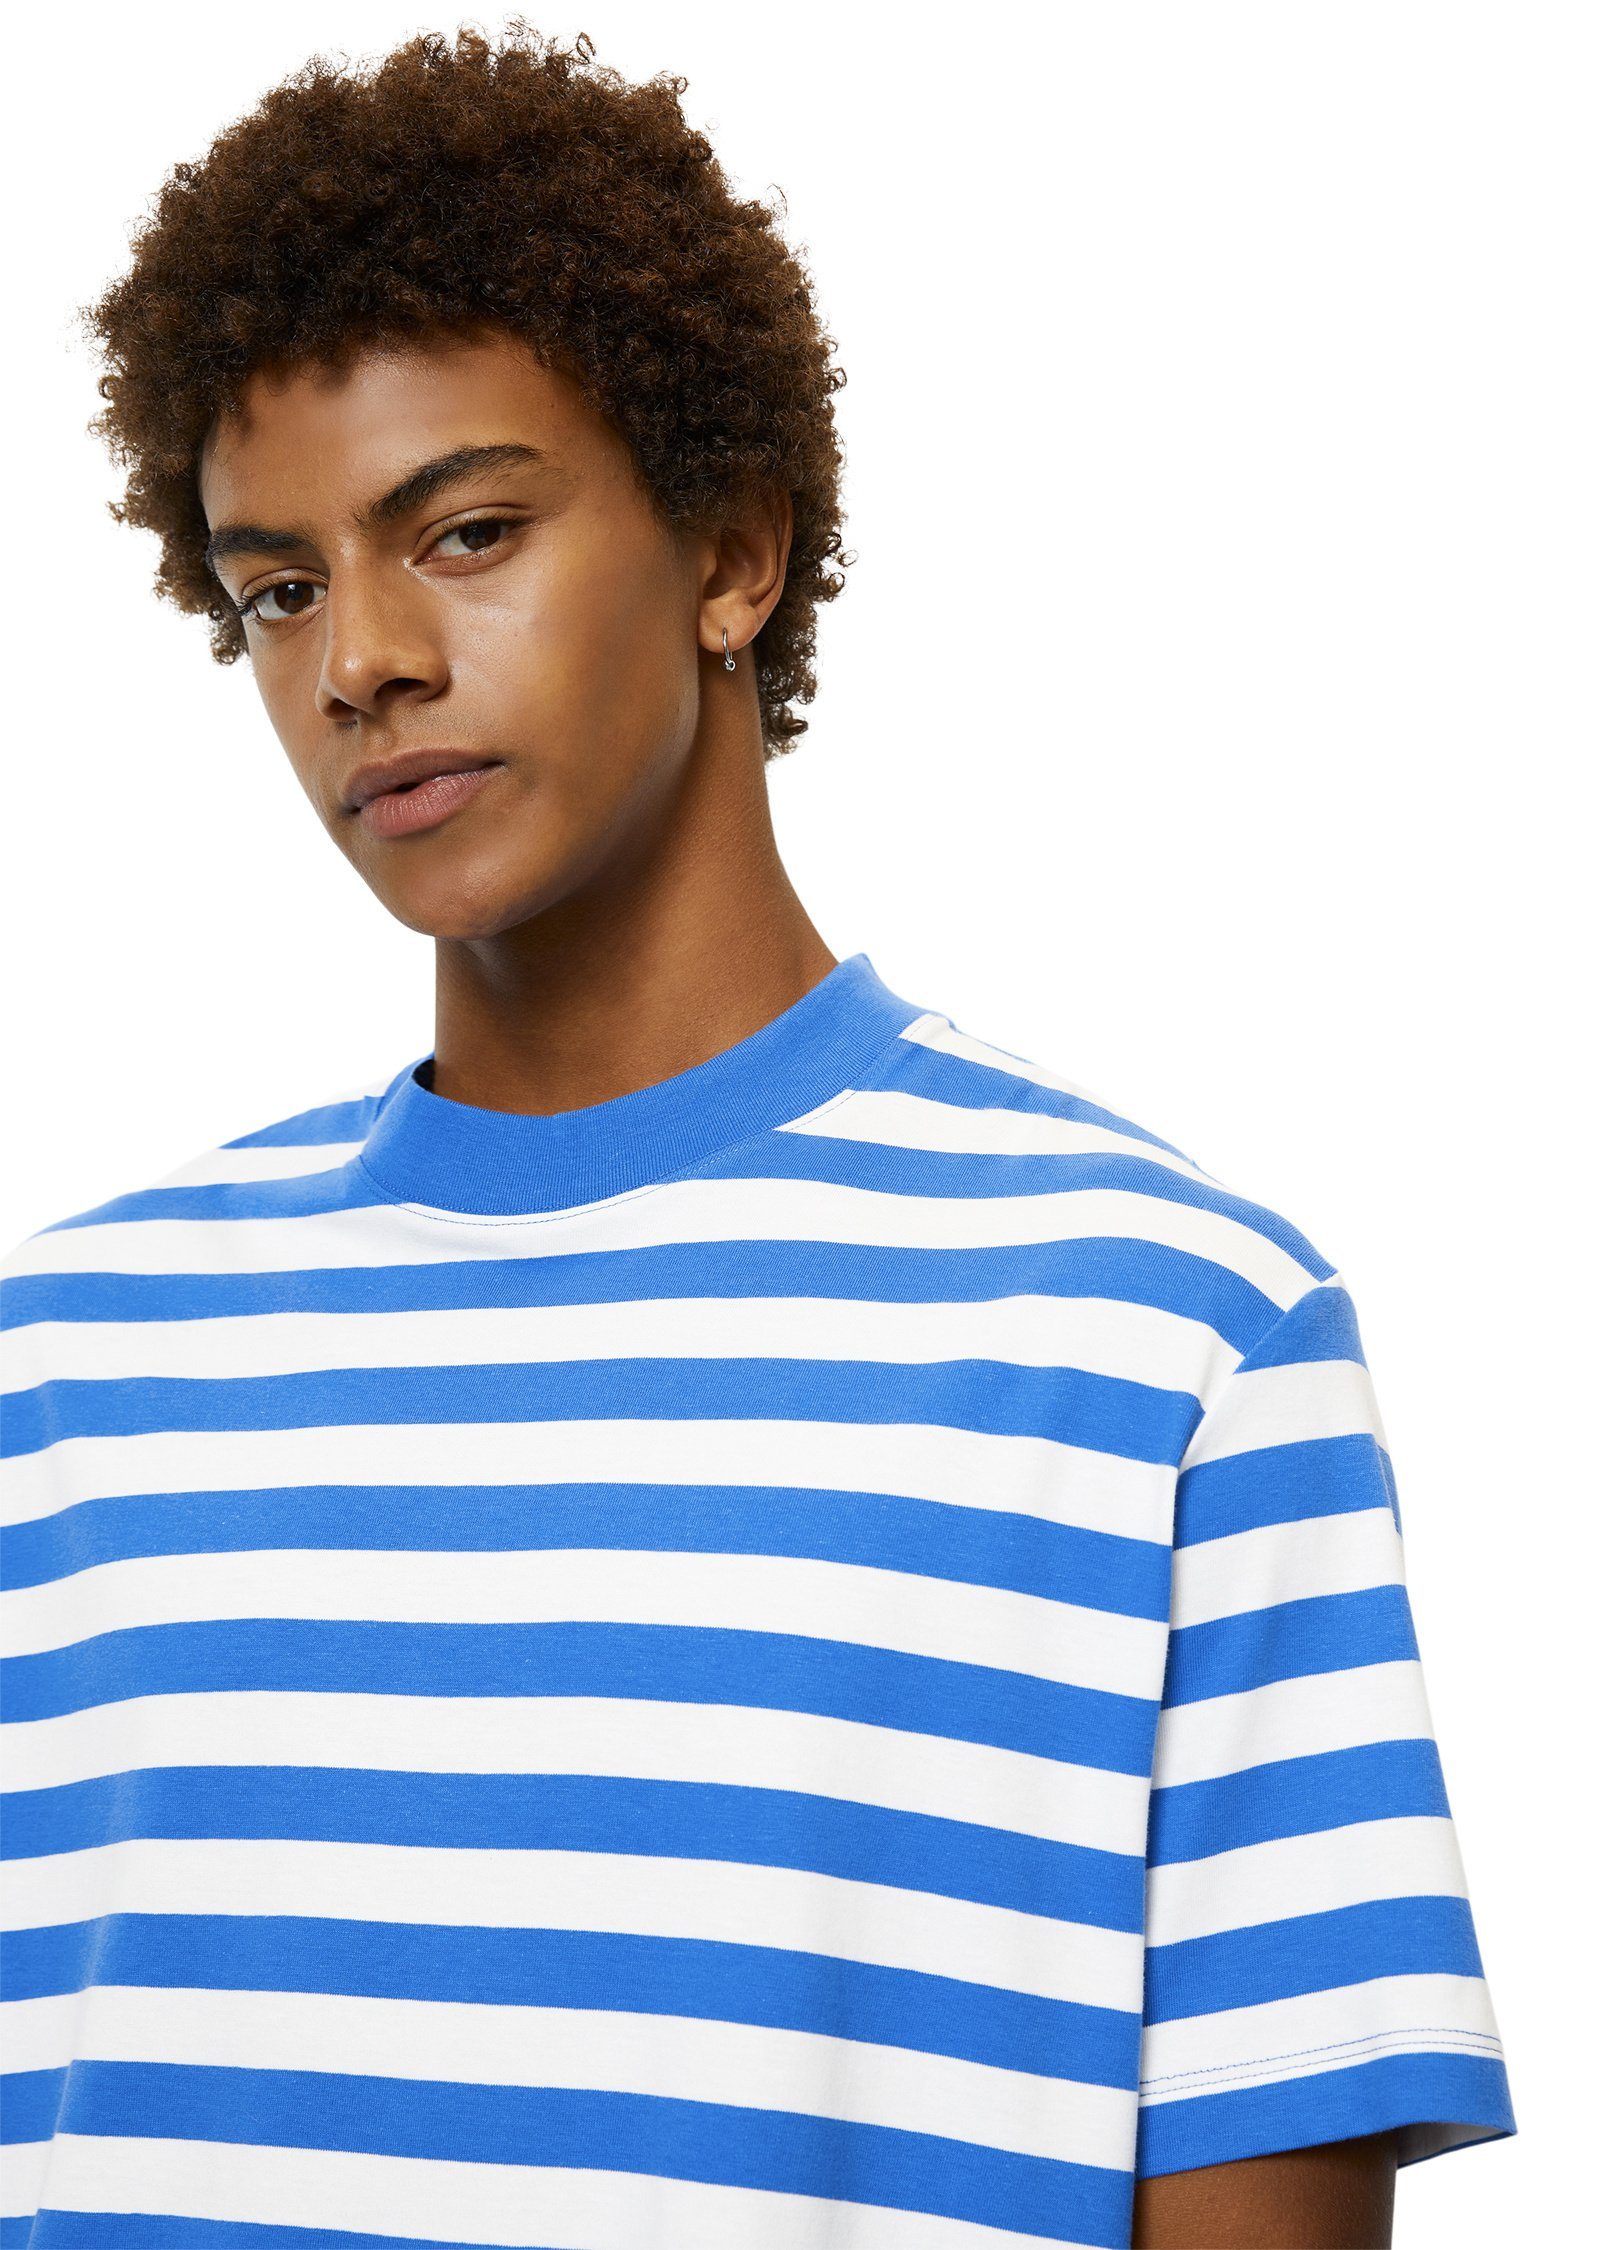 O'Polo blau mit DENIM Marc garngefärbtem Streifen-Muster T-Shirt